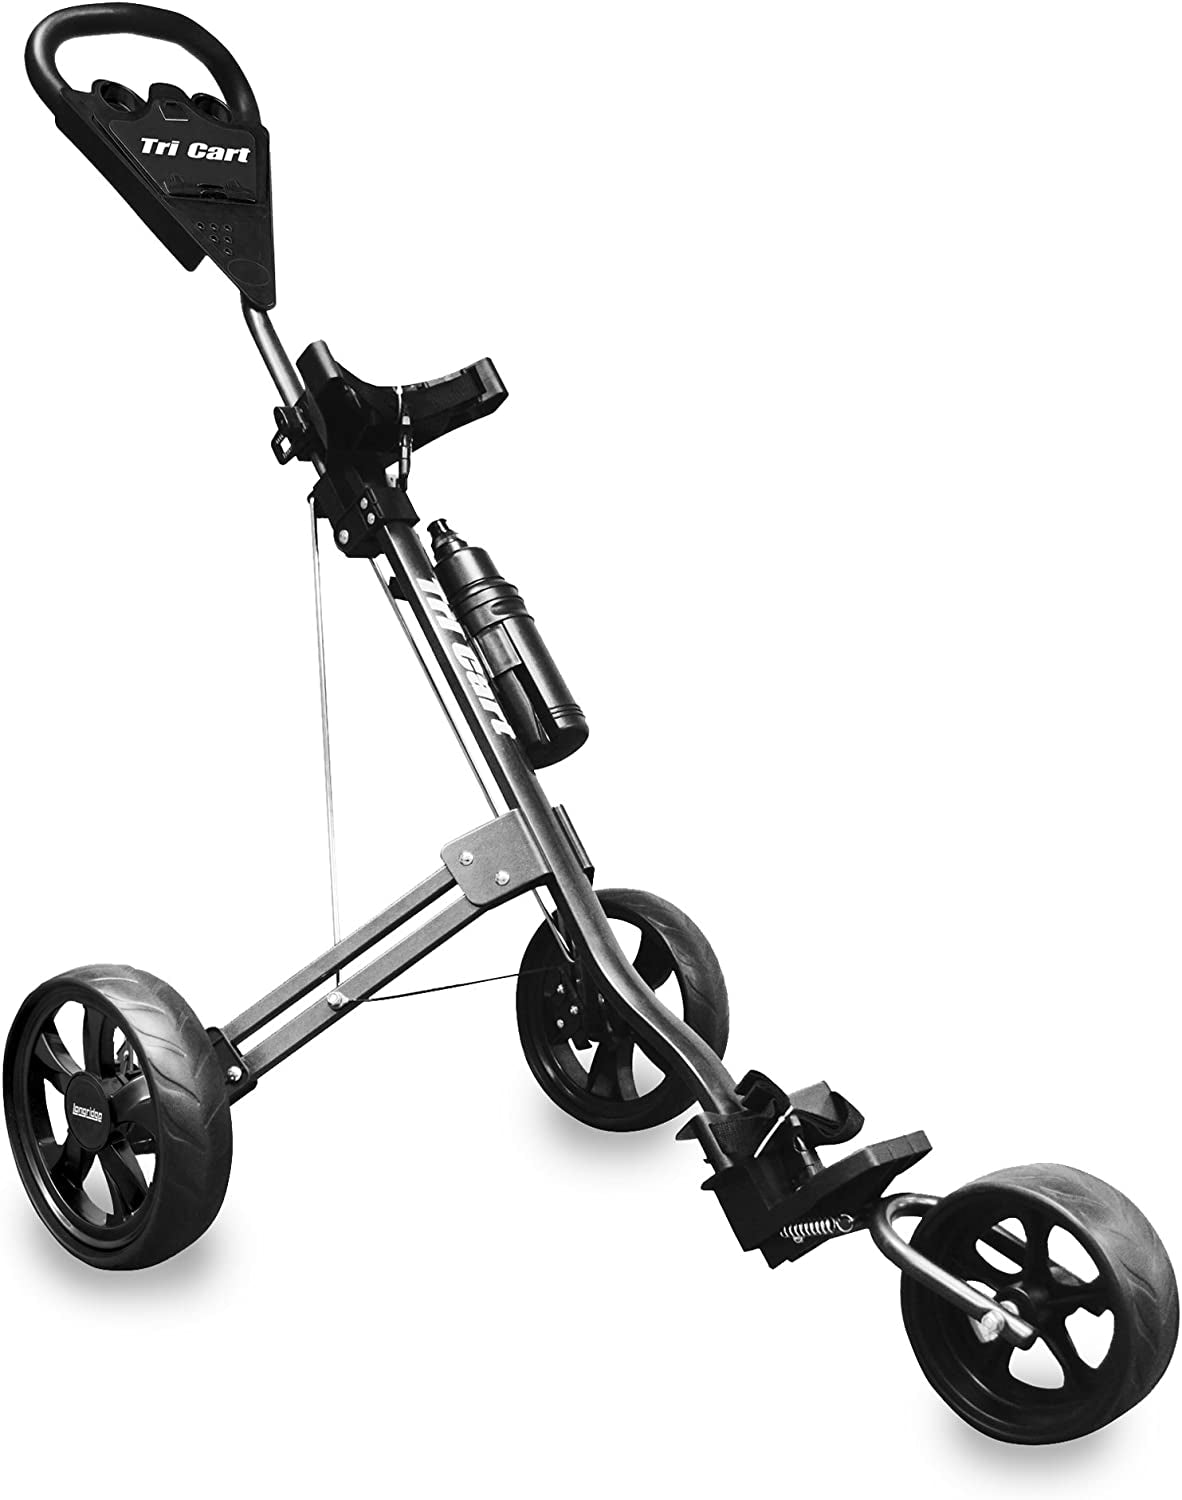 2019 Golf Tri Cart 3 Wheel Mens Push/Pull Golf Trolley + Free Water Bottle